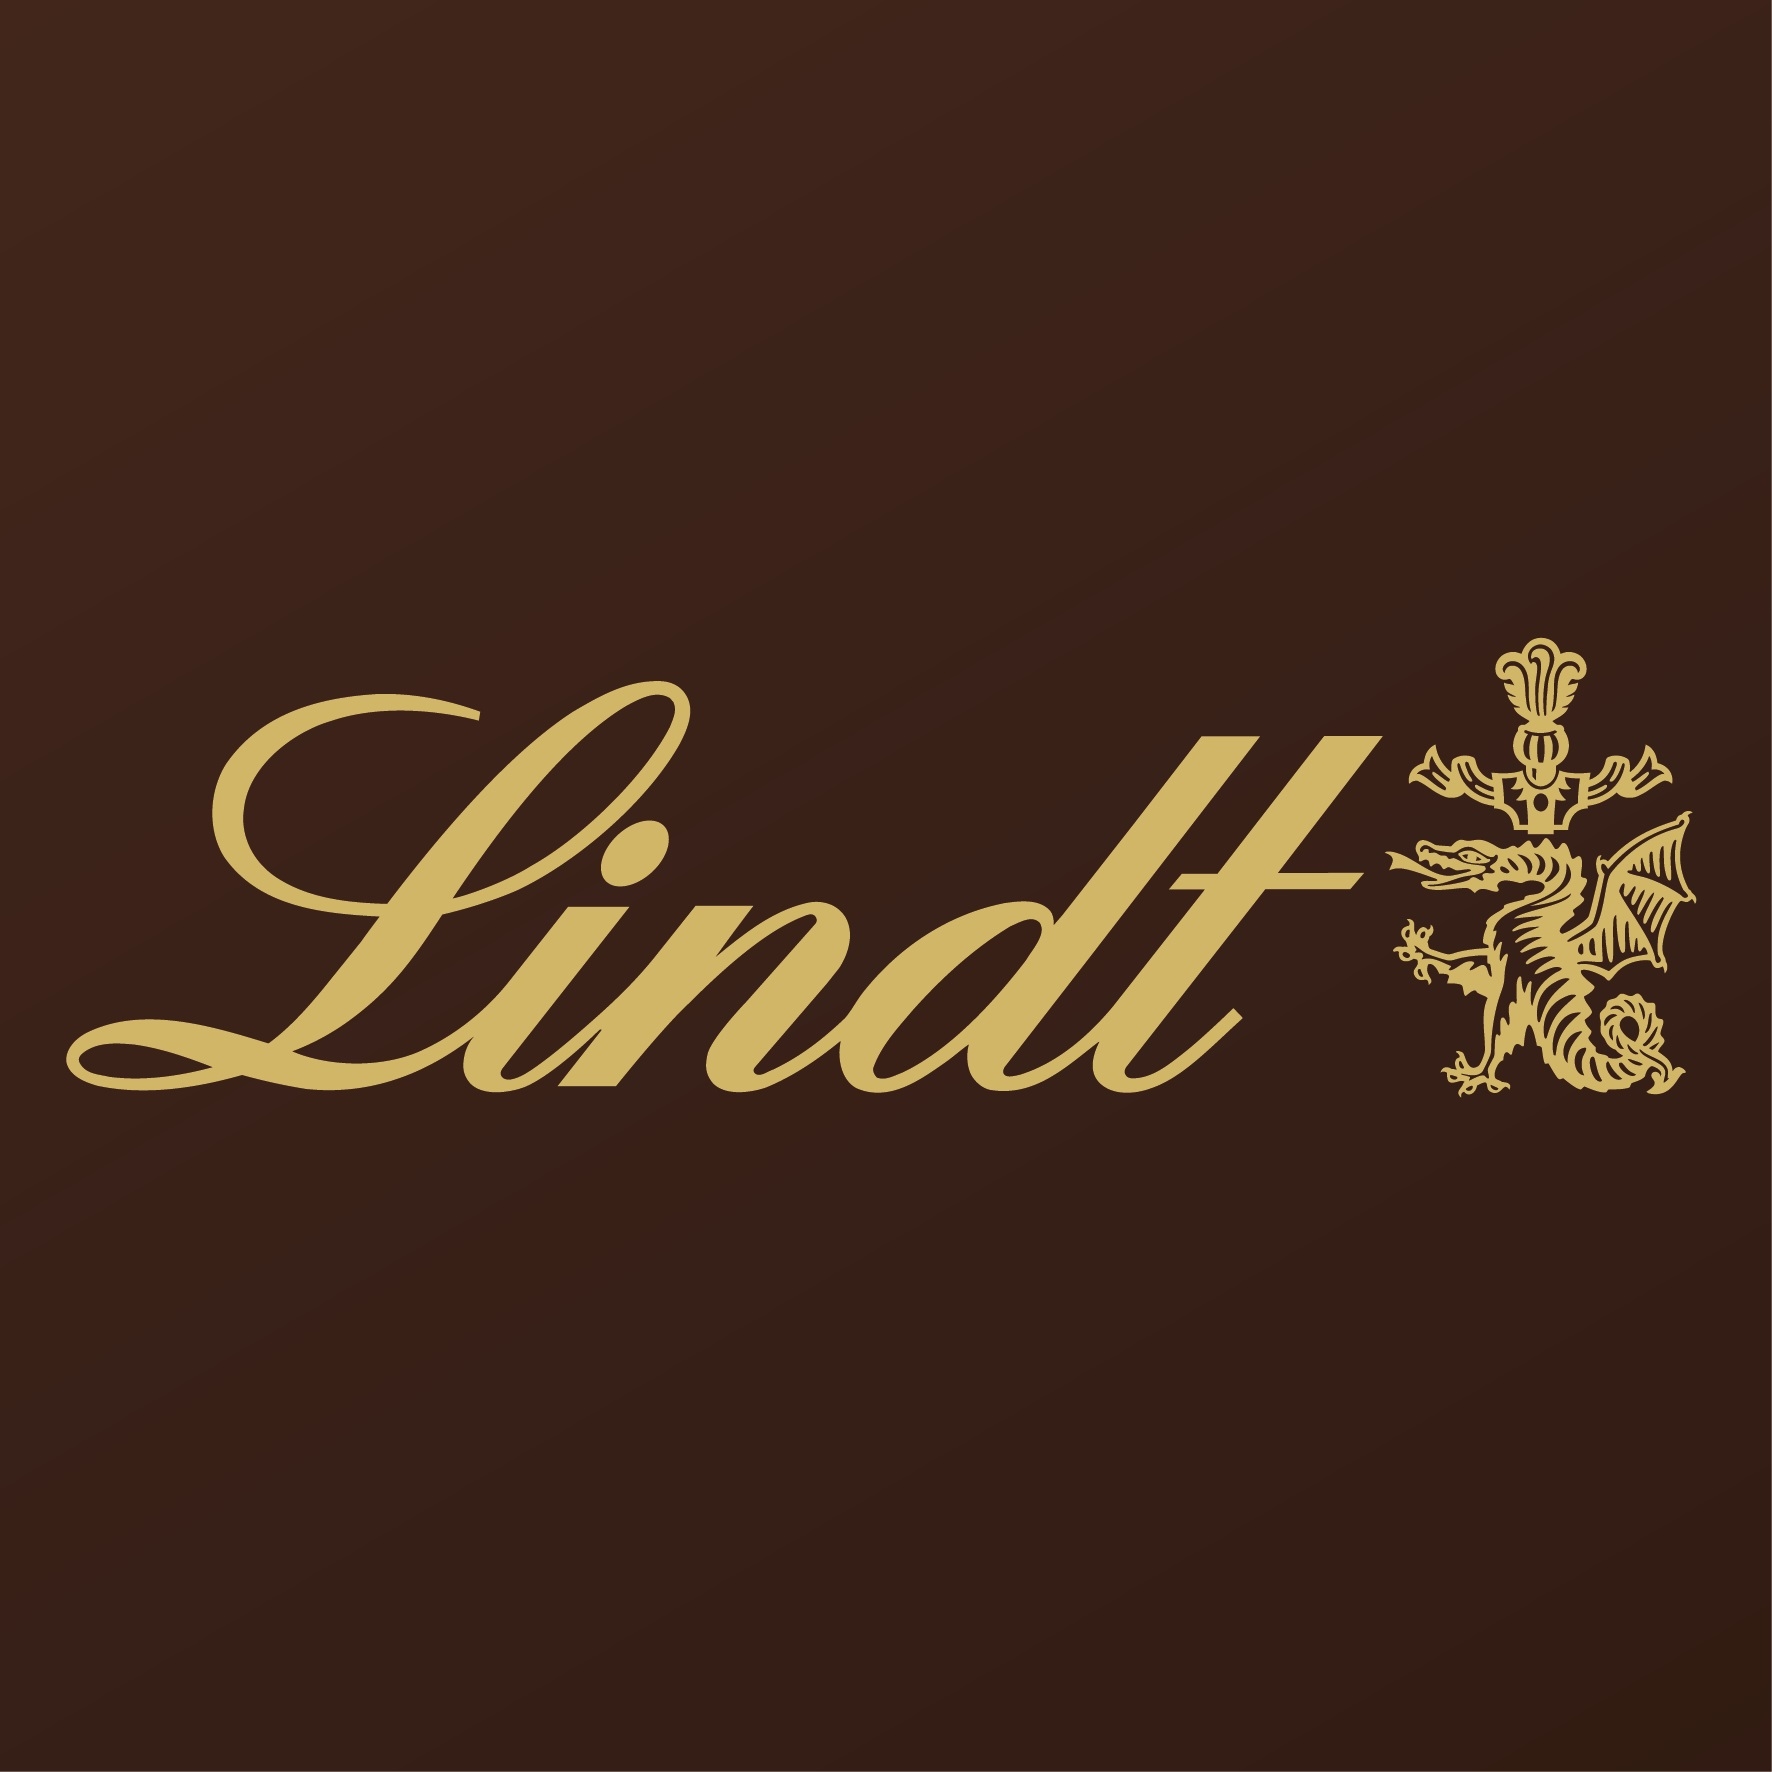 Lindt Boutique Dresden